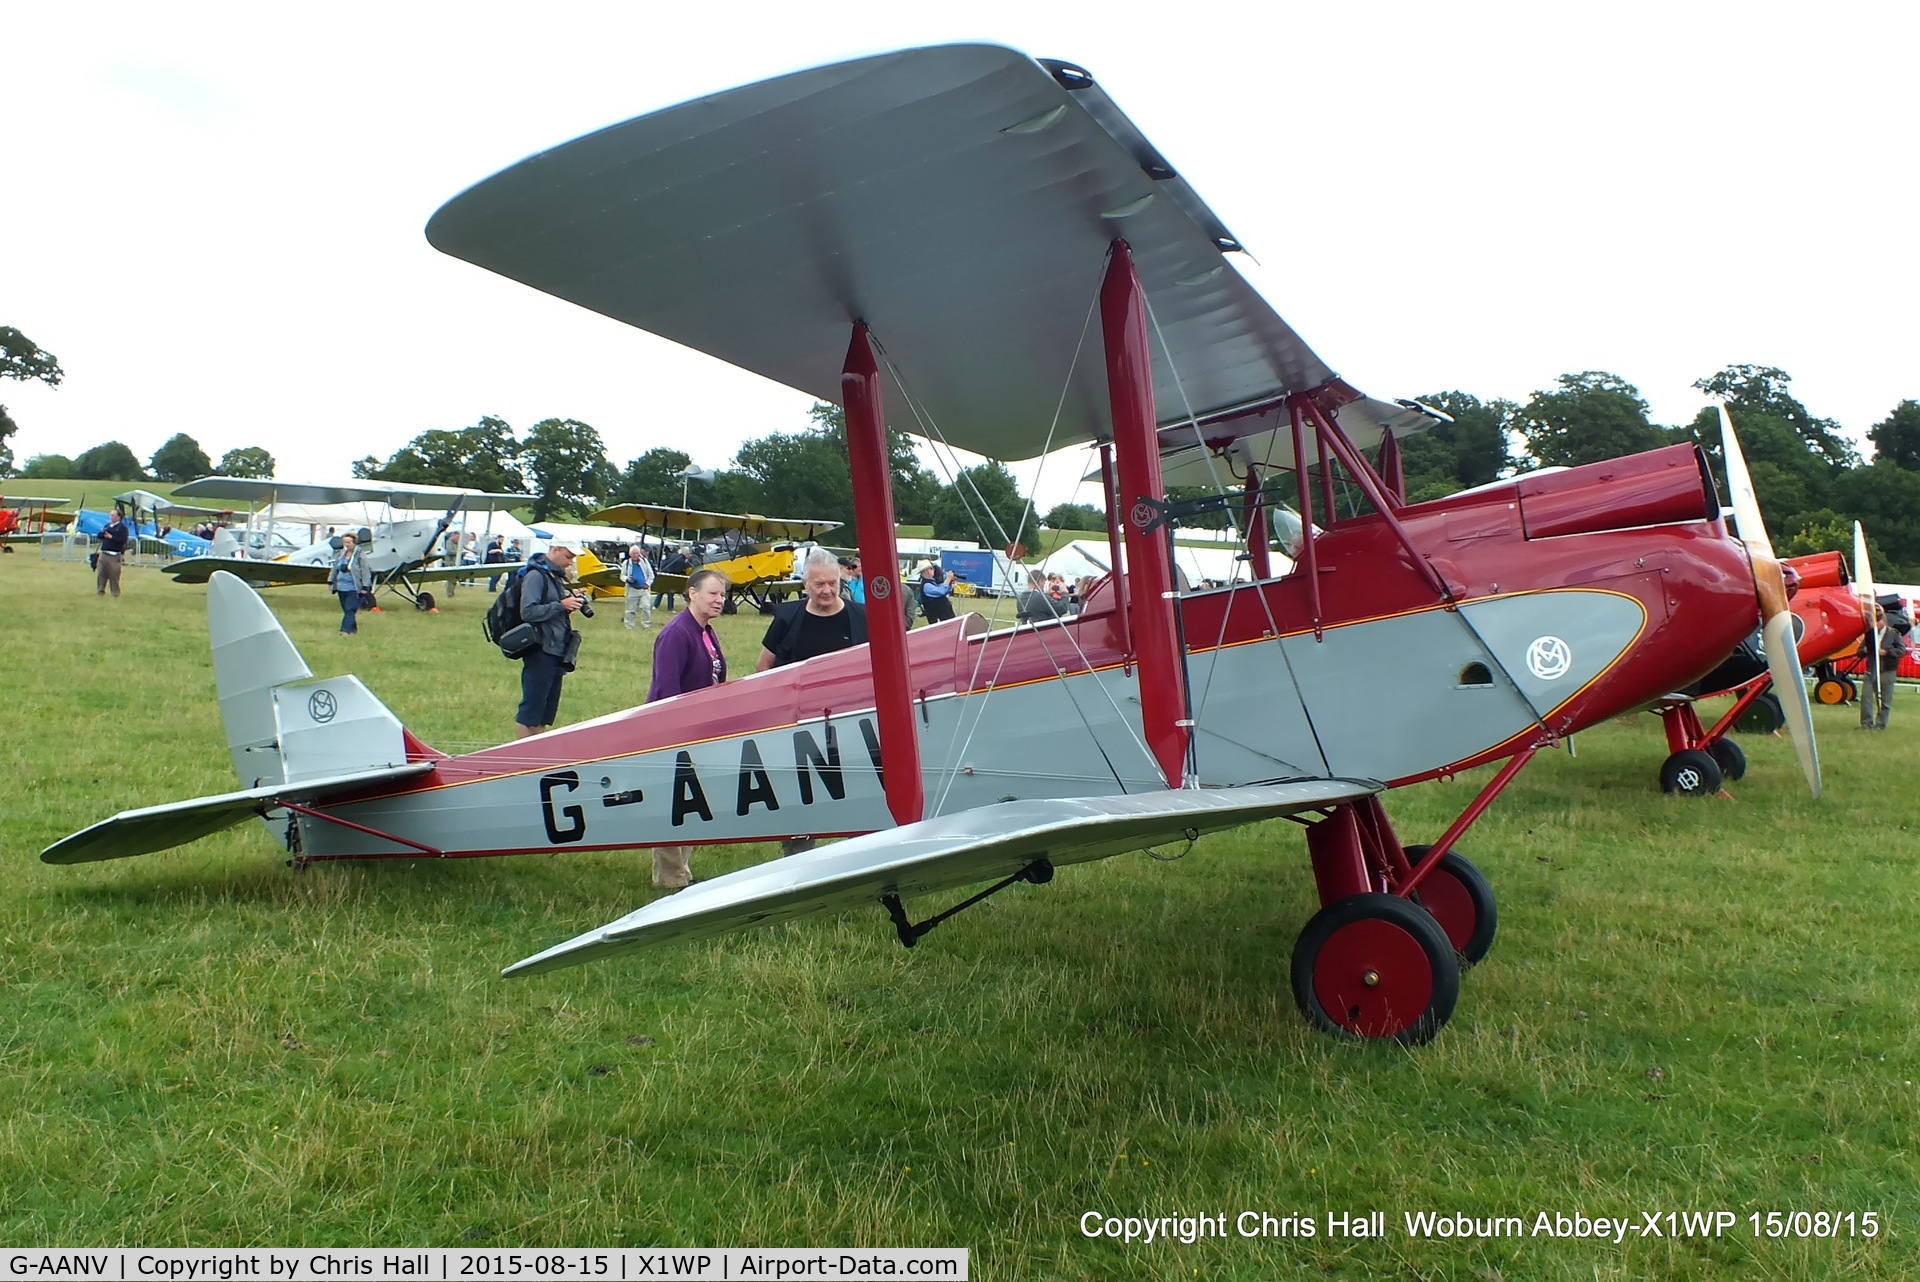 G-AANV, 1931 Morane-Saulnier MS-60 Moth C/N 13, International Moth Rally at Woburn Abbey 15/08/15